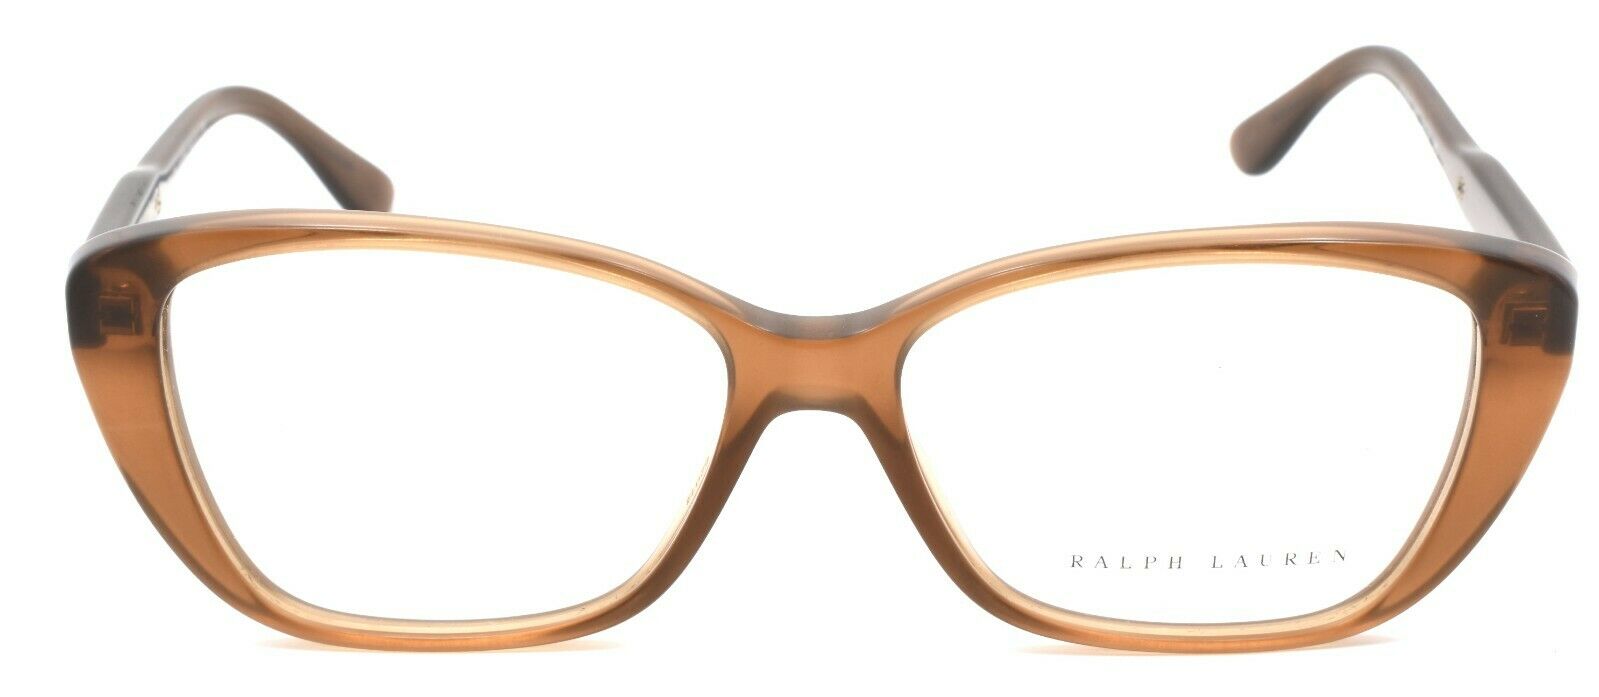 2-Ralph Lauren RL6116 5477 Women's Eyeglasses Frames 52-14-140 Brown Cognac-Does not apply-IKSpecs